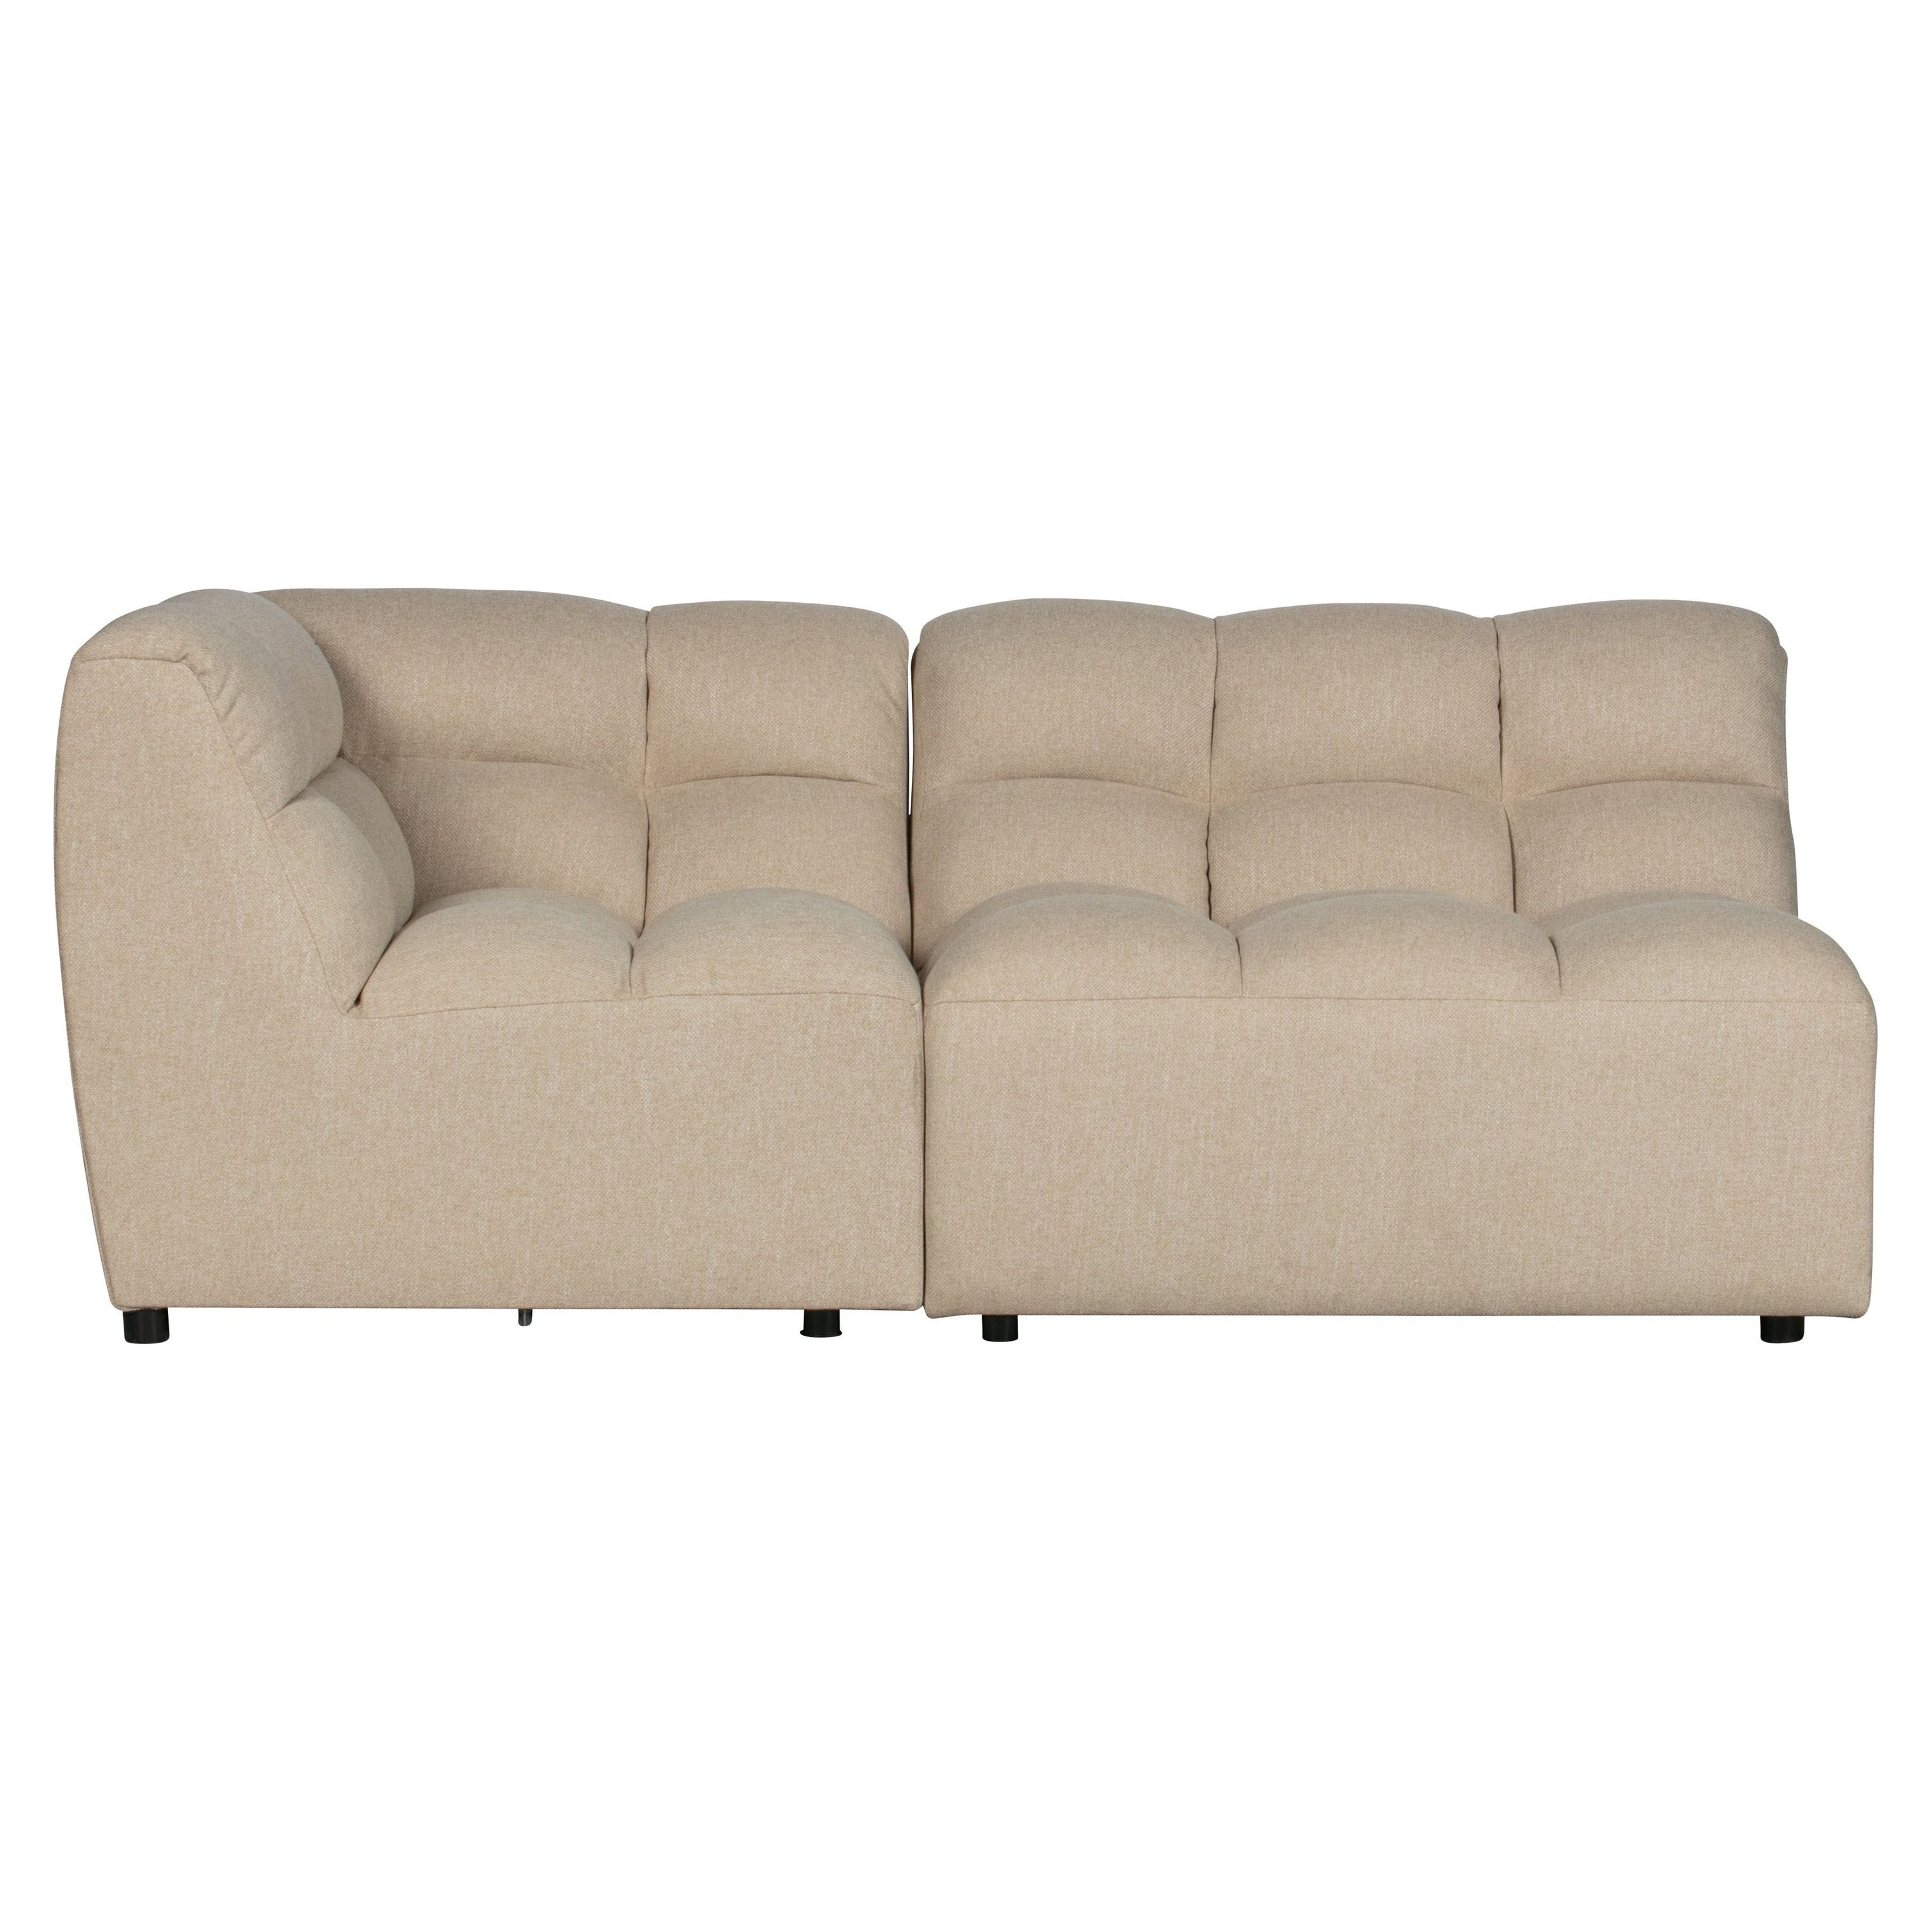 "PEPPER" modulinės sofos fotelis, smėlio spalva